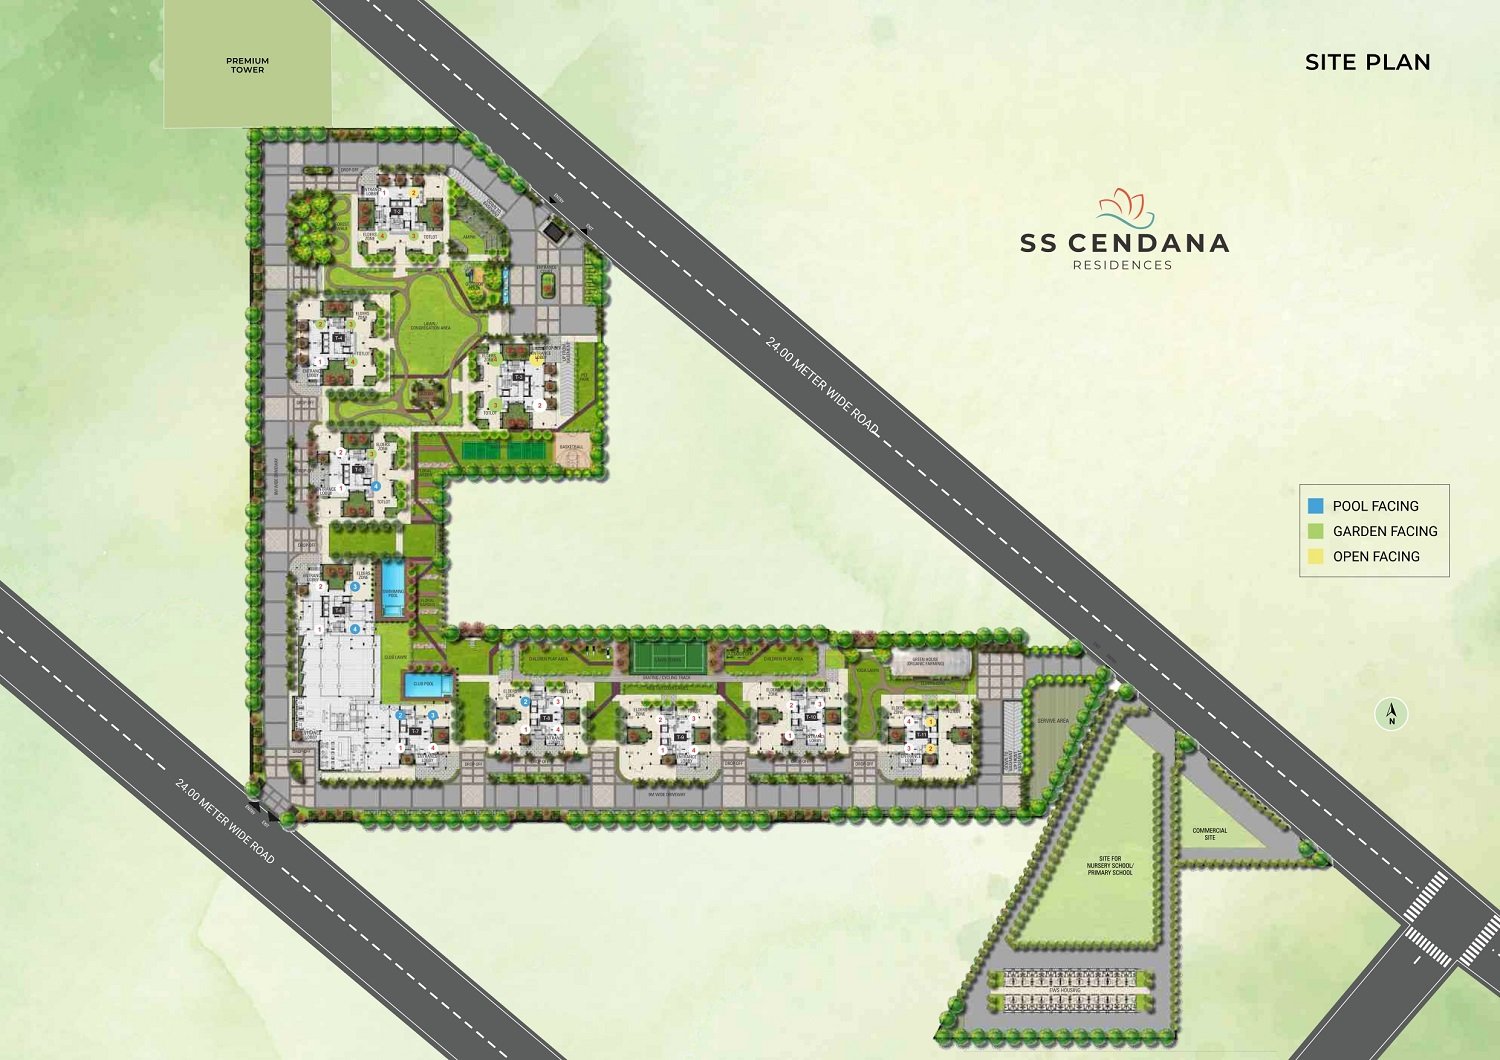 SS Cendana Residences Site Plan